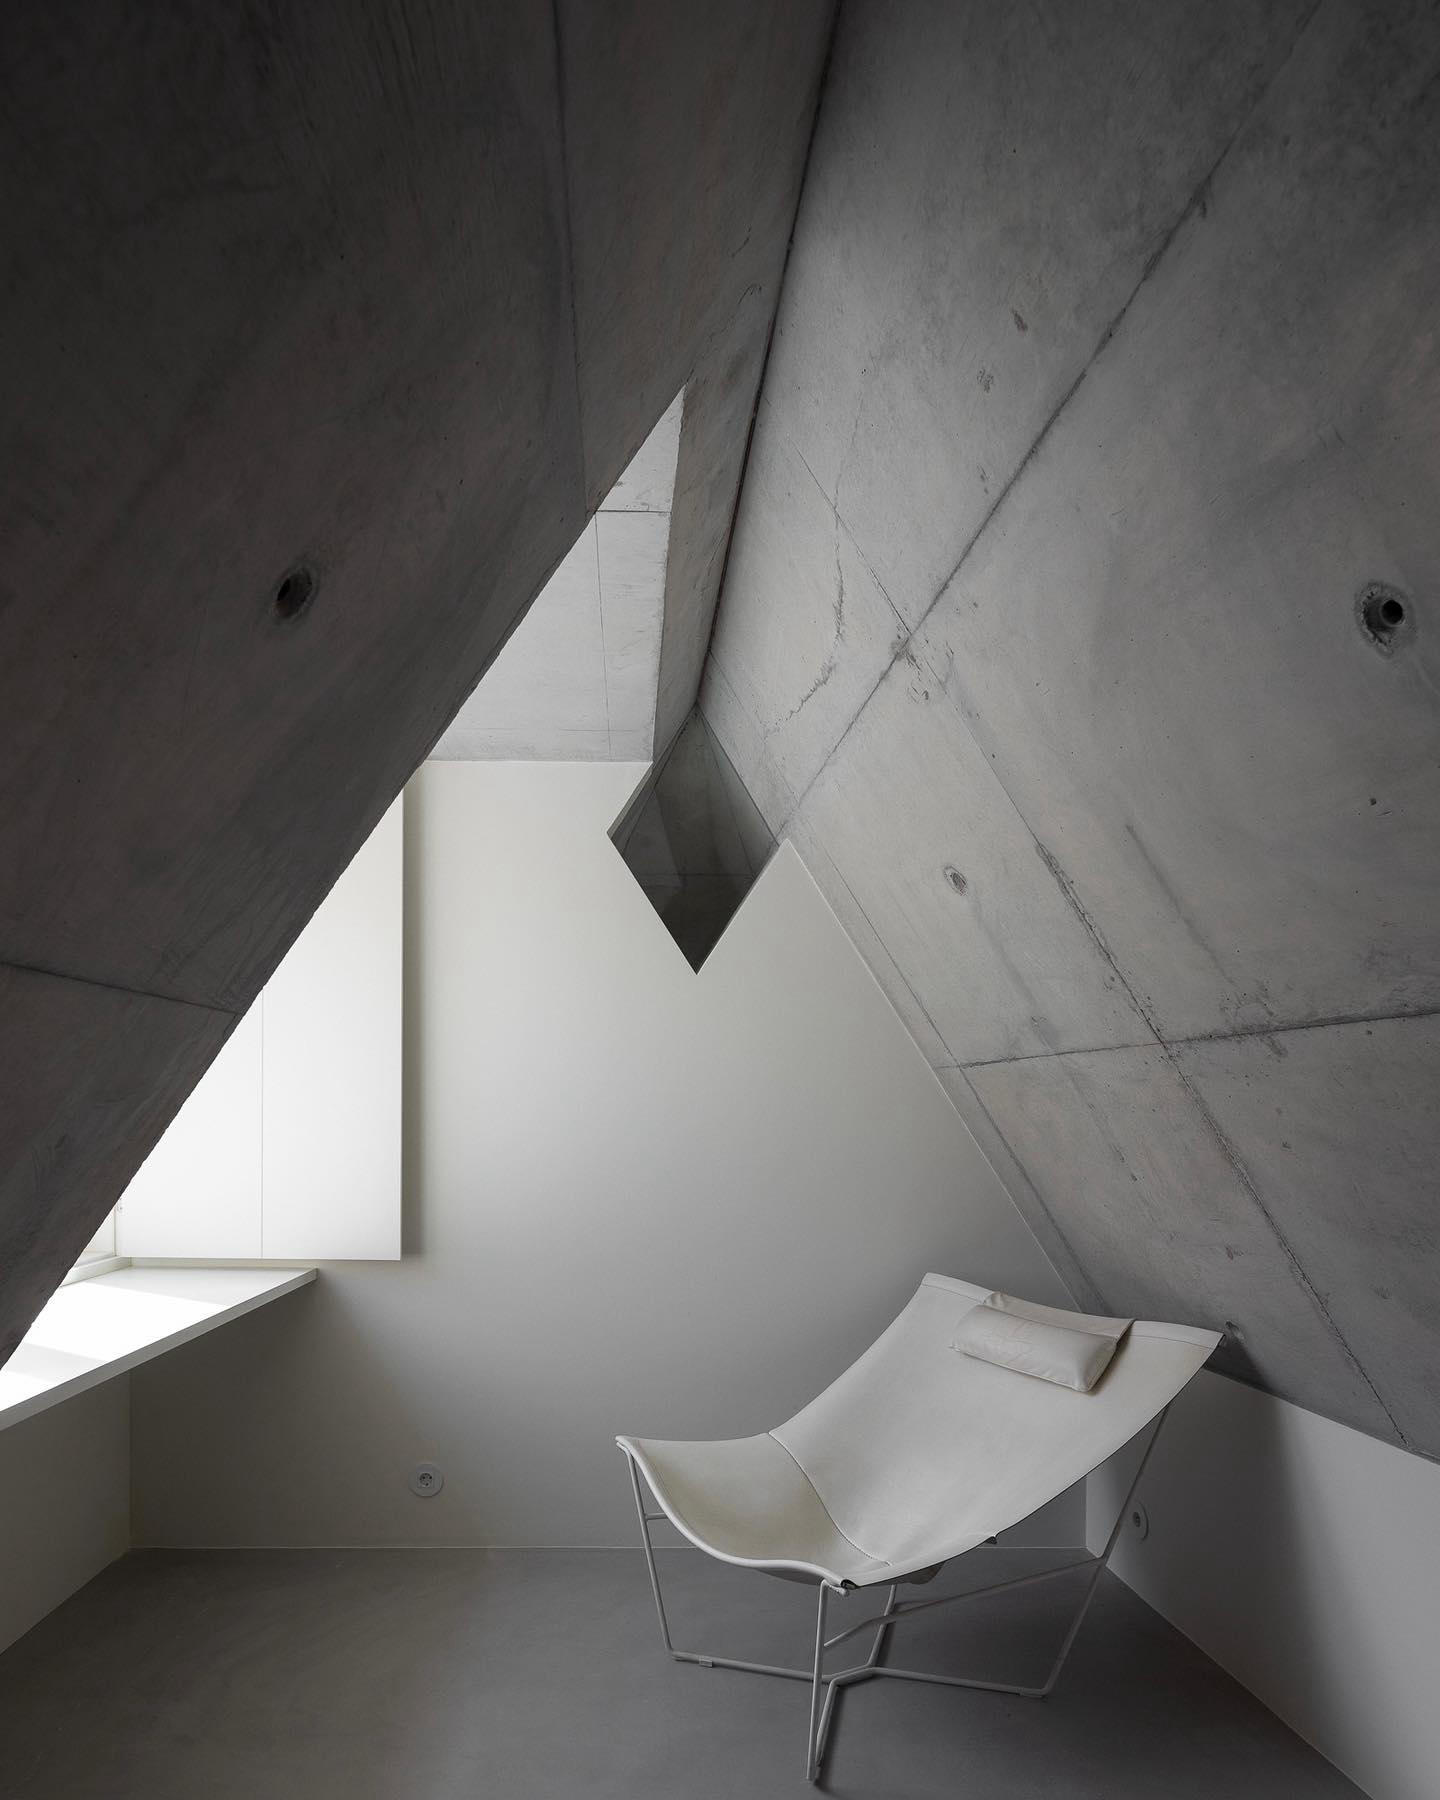 designboom magazine - #portuguese studio #ata__atelier fits a minimalistic apartment building along